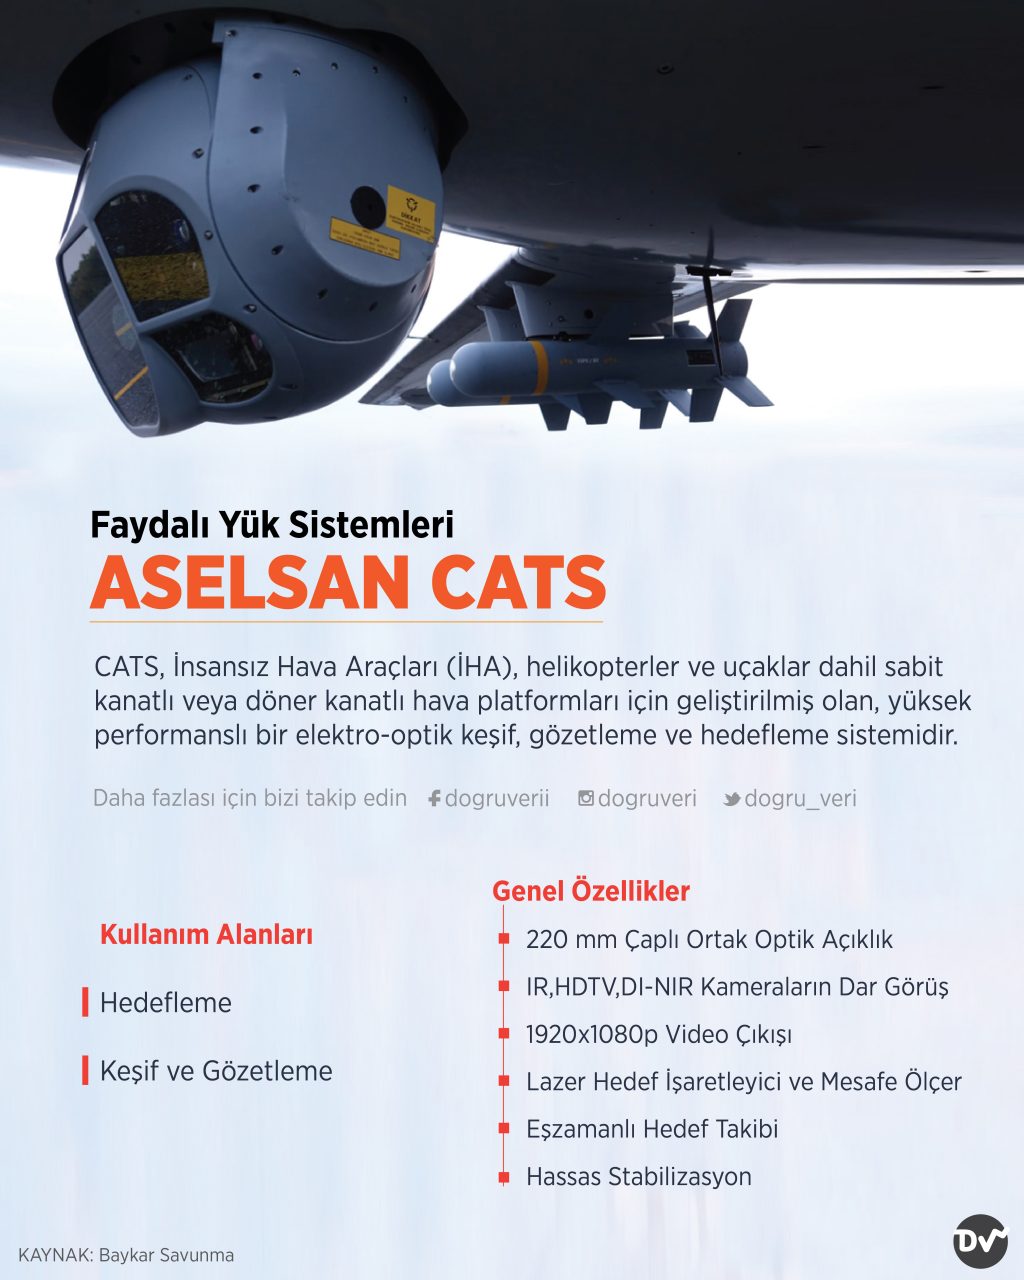 Faydalı Yük Sistemleri – ASELSAN CATS